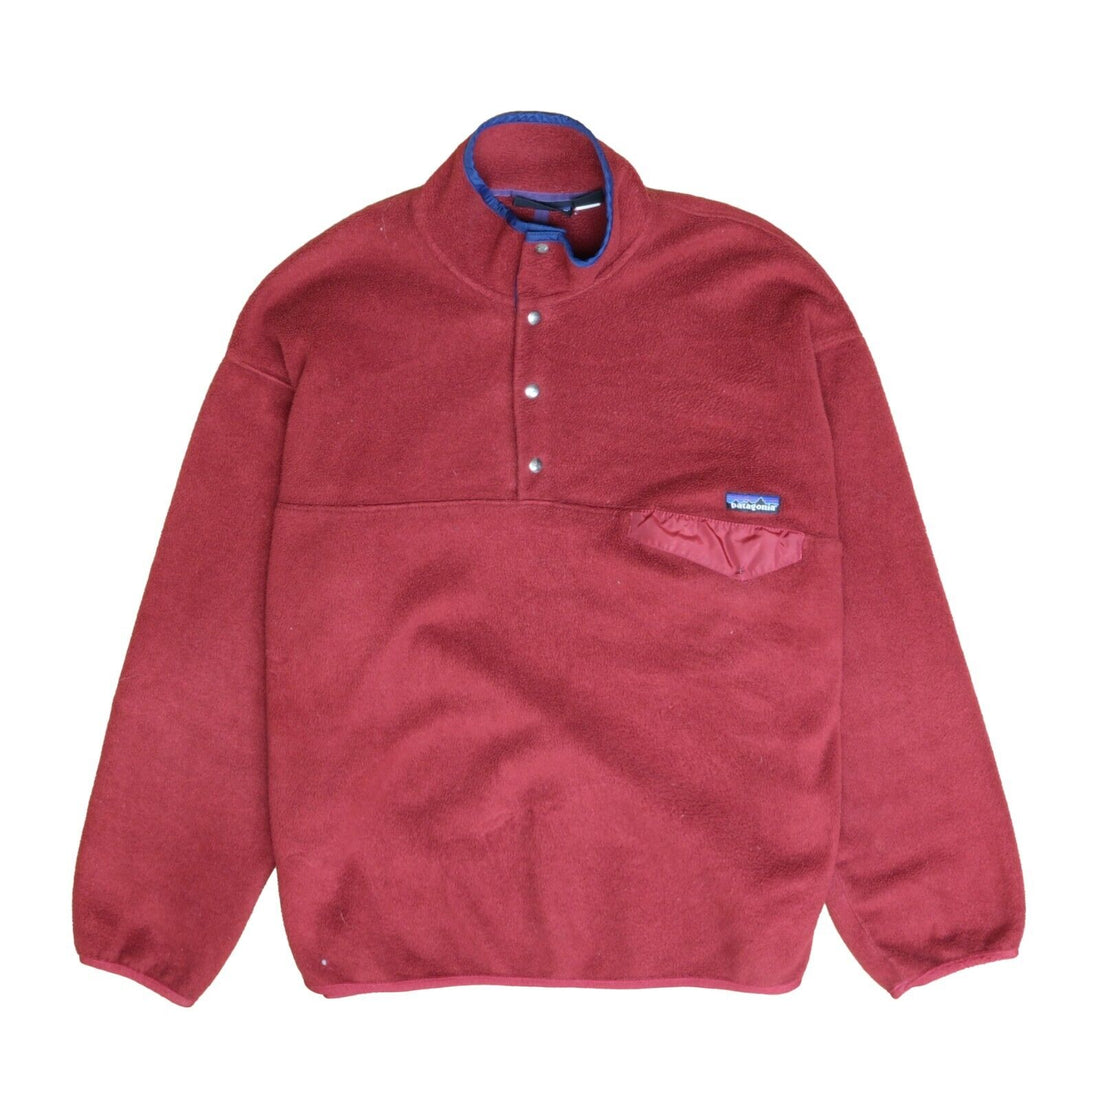 Vintage Patagonia Snap-T Fleece Jacket Size XL Maroon Red